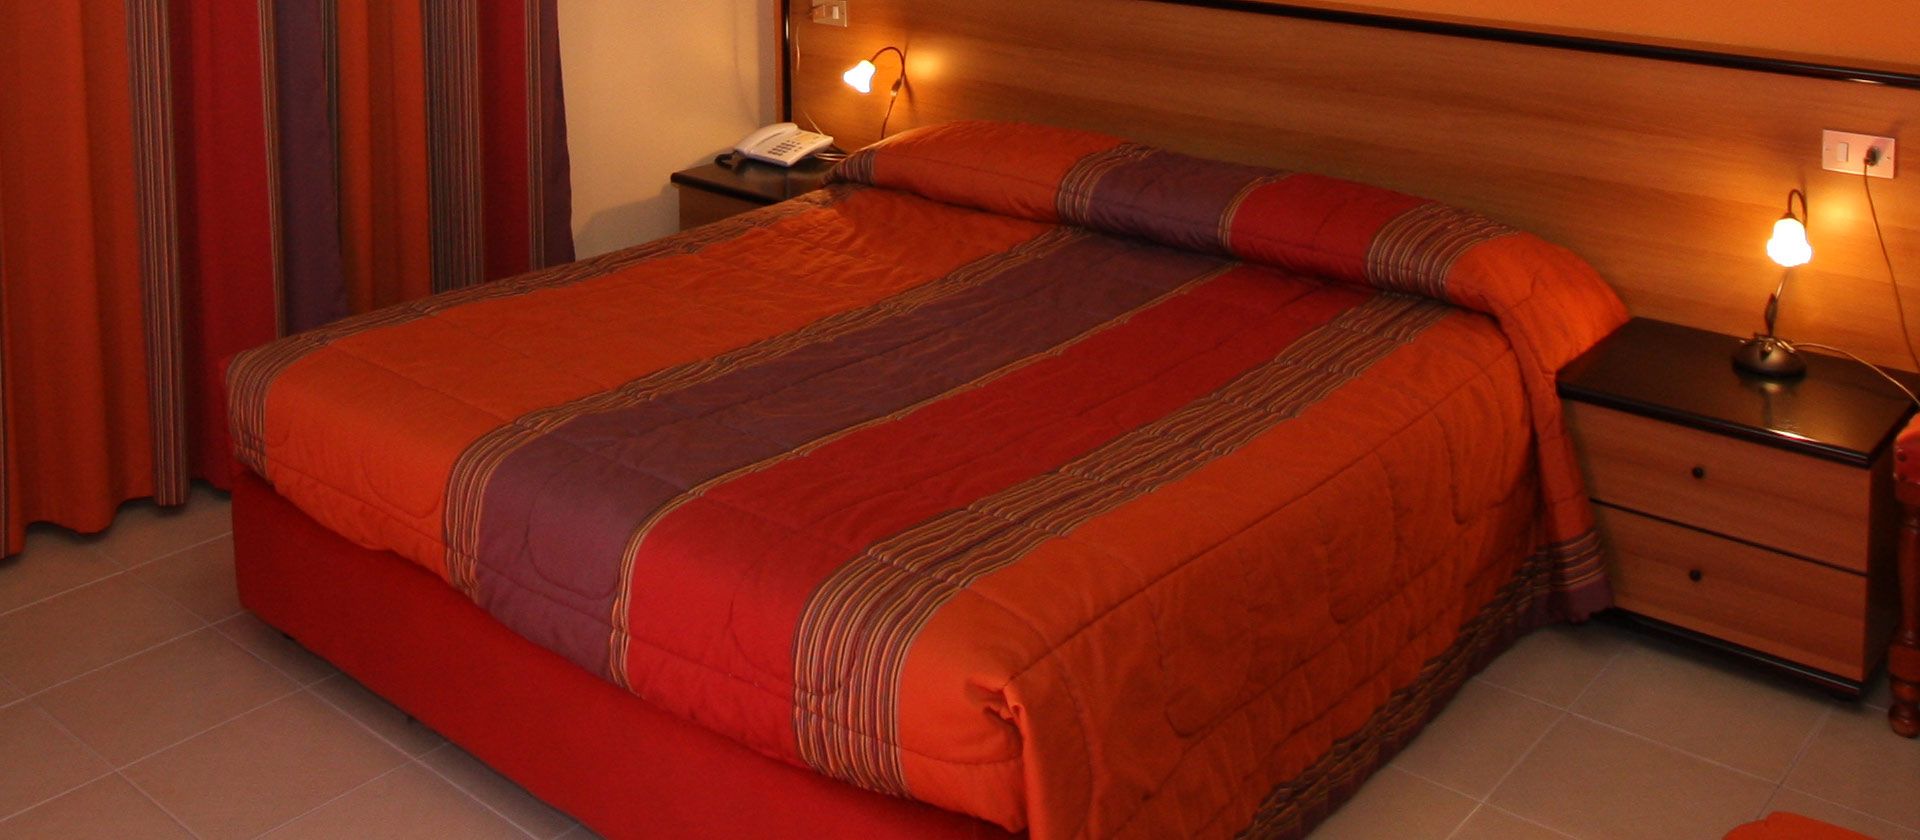 camere Hotel Naxos Bed and Breakfast Alba Adriatica